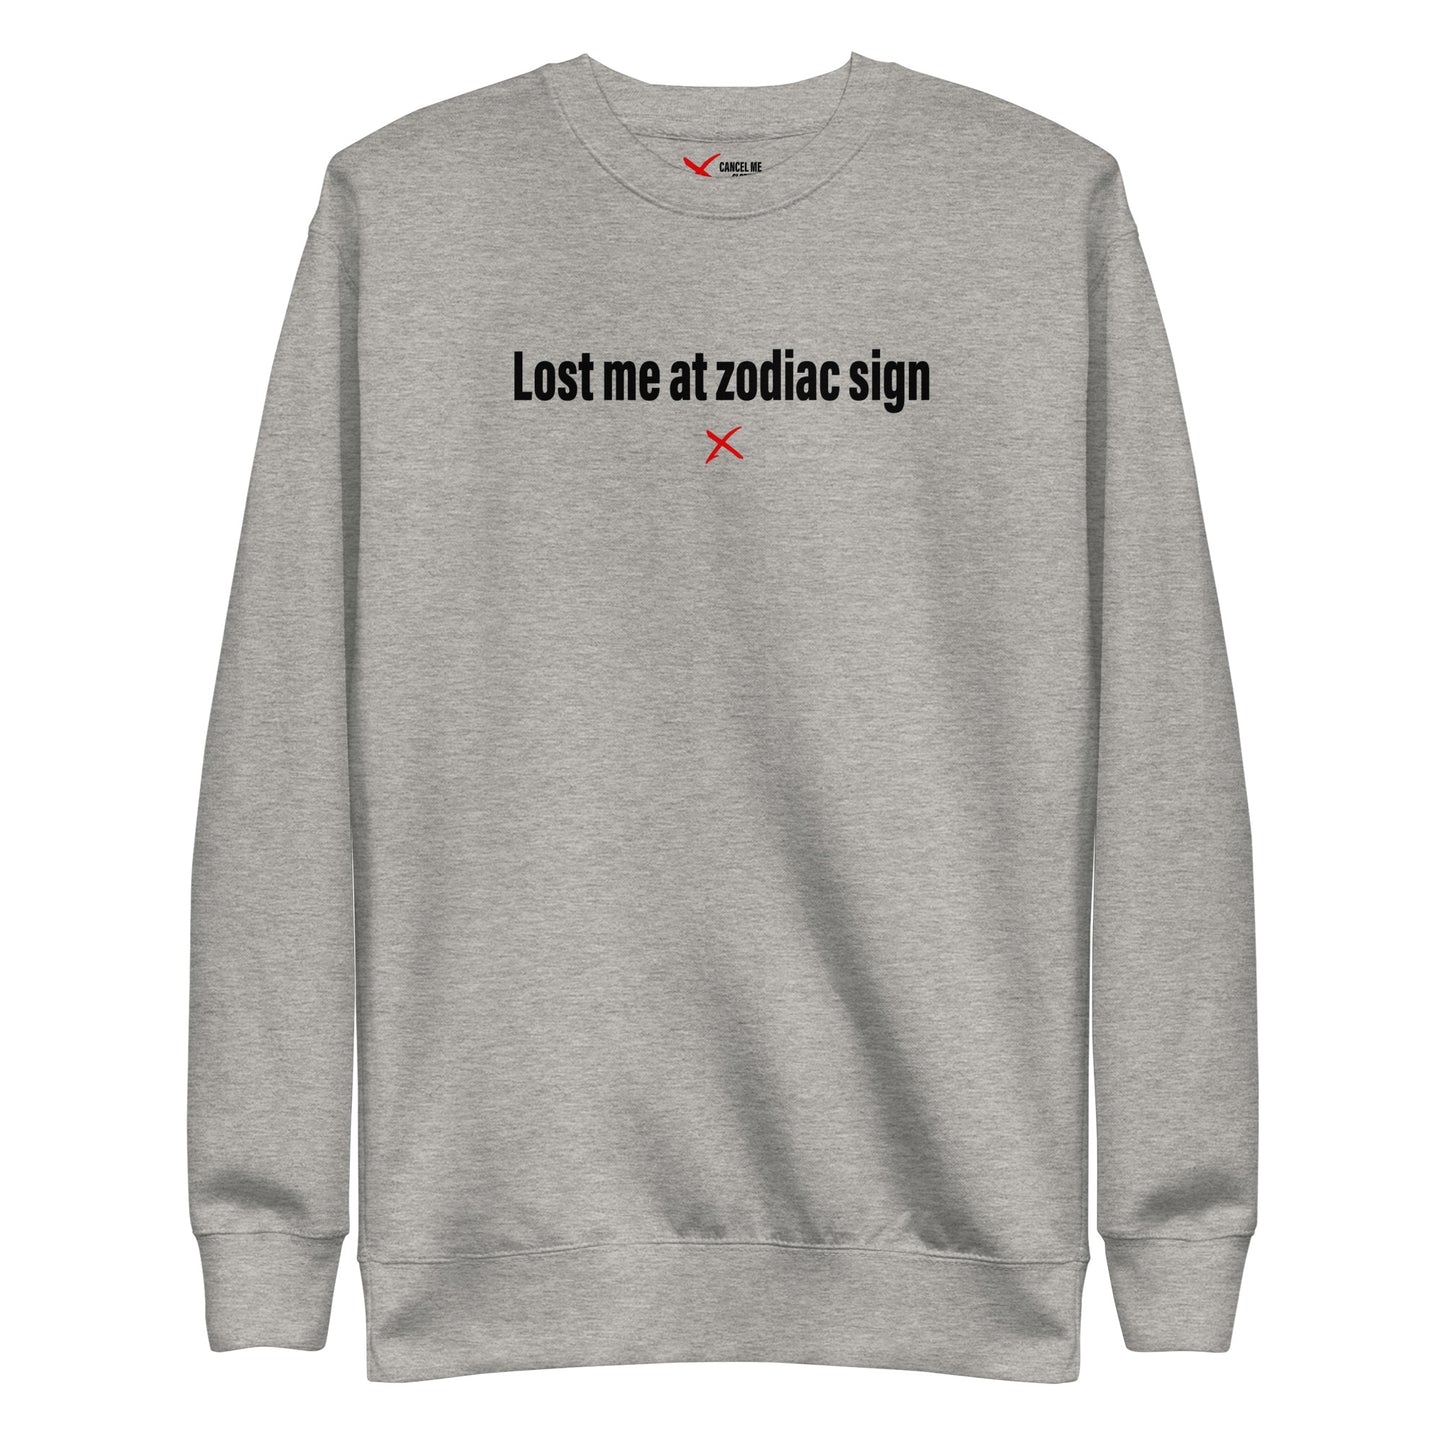 Lost me at zodiac sign - Sweatshirt